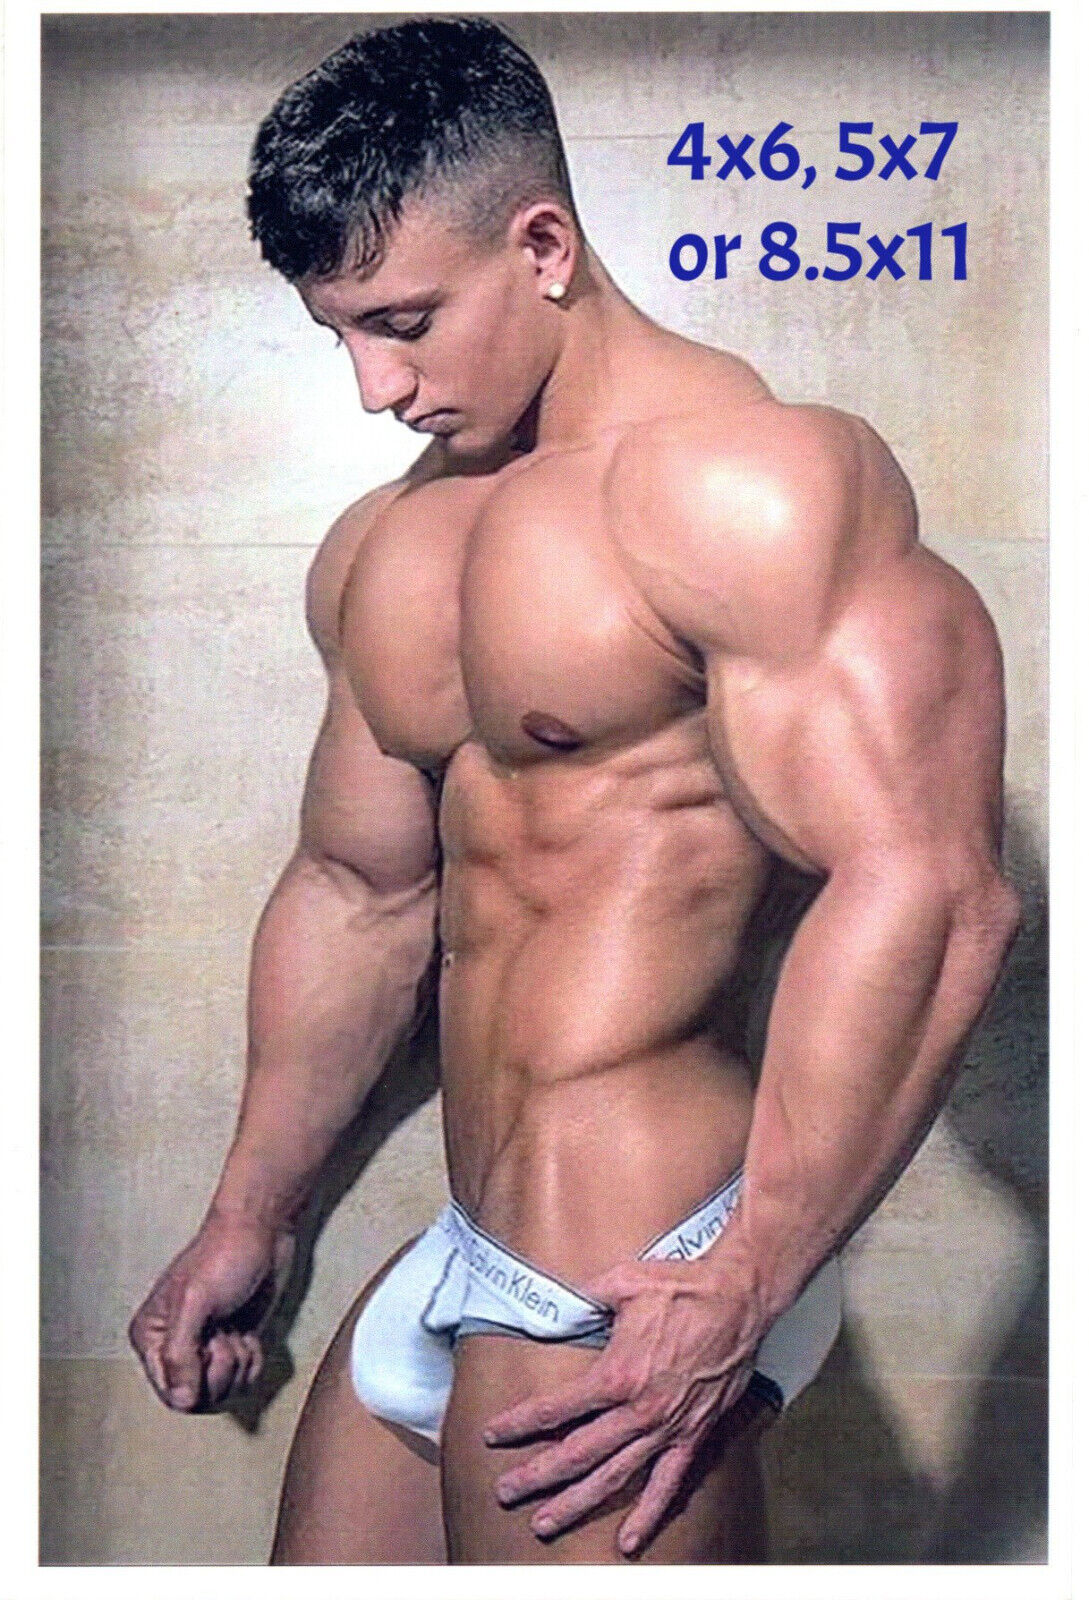 Handsome Muscular Male Bodybuilder Gay Interest Photo Photograph Reprint #17